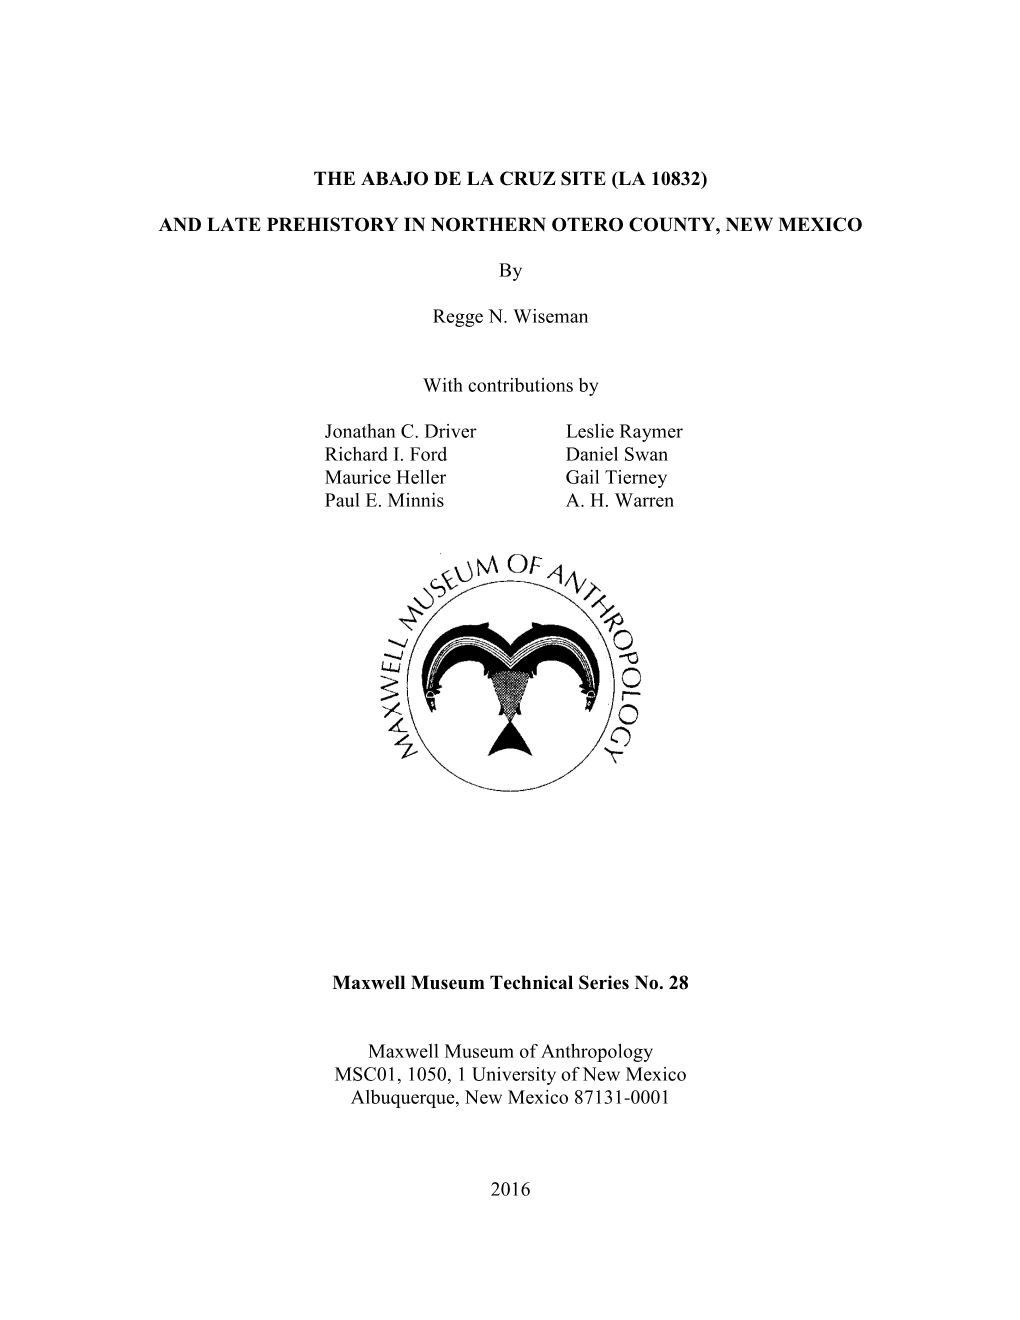 THE ABAJO DE LA CRUZ SITE (LA 10832) and LATE PREHISTORY in NORTHERN OTERO COUNTY, NEW MEXICO by Regge N. Wiseman with Contribut